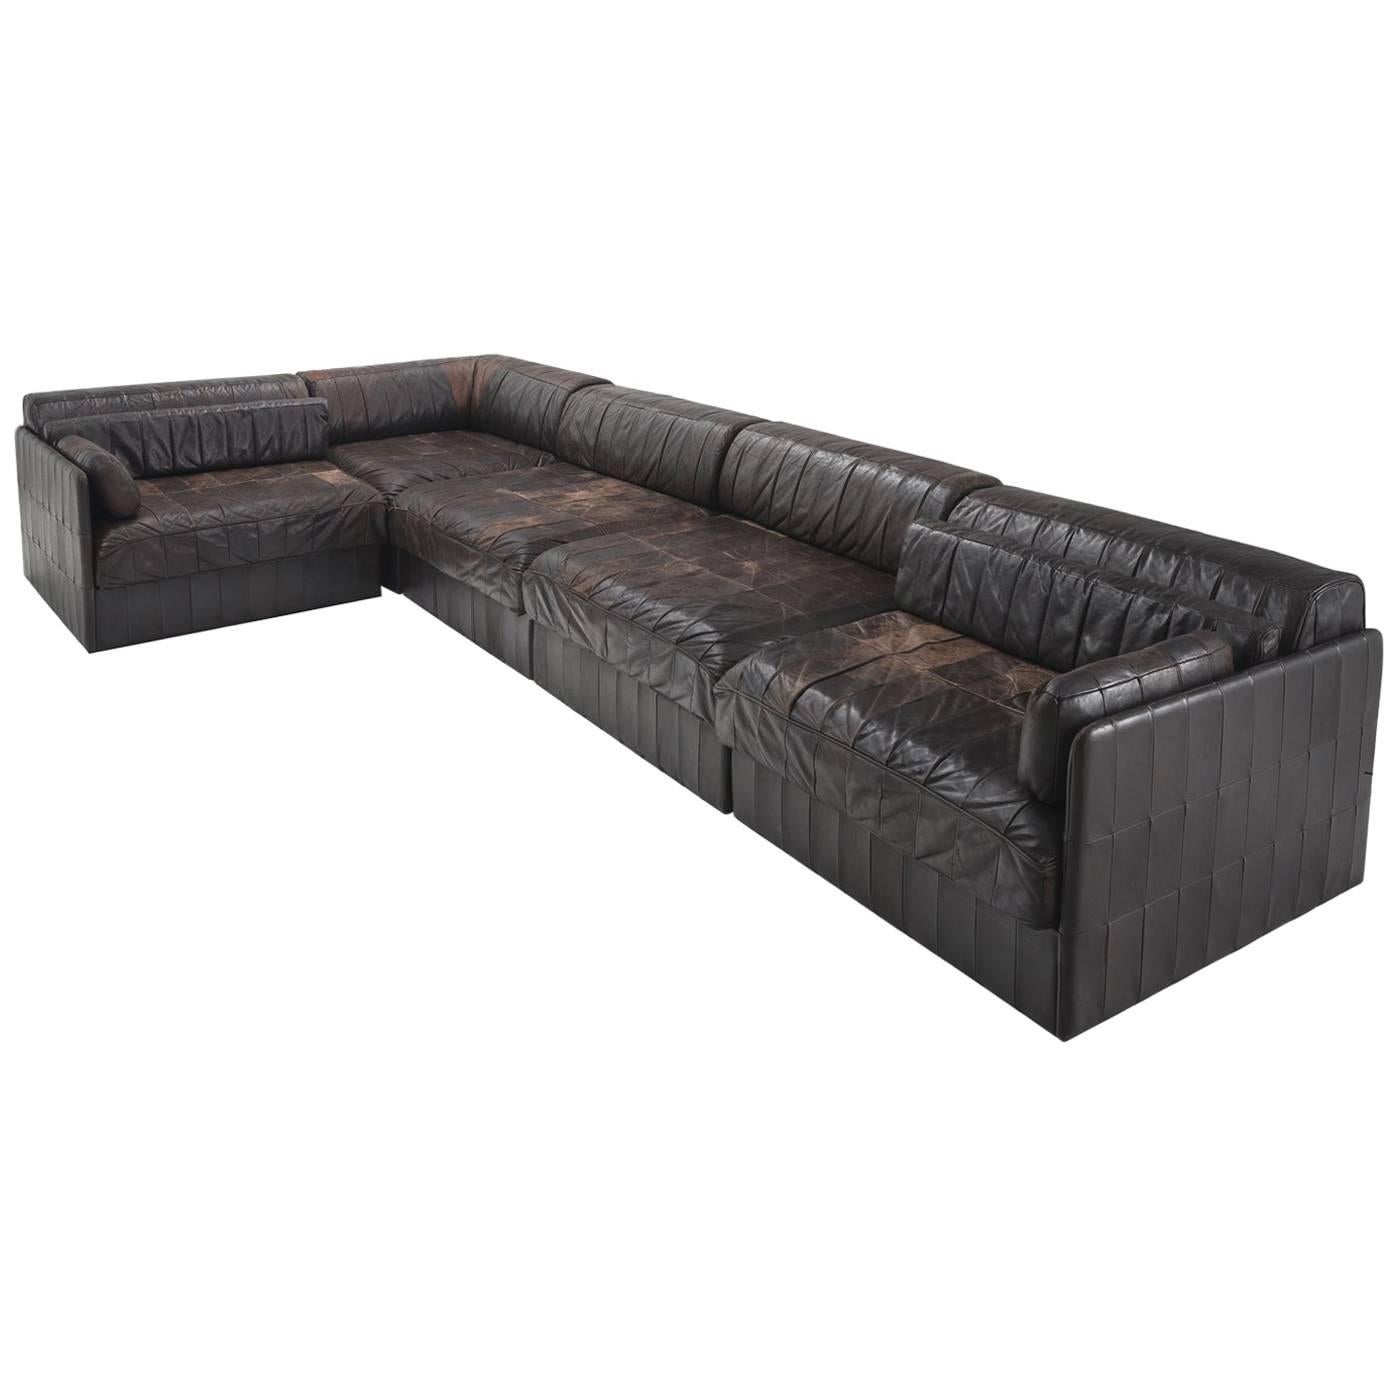 Modular Sofa Leather for De Sede